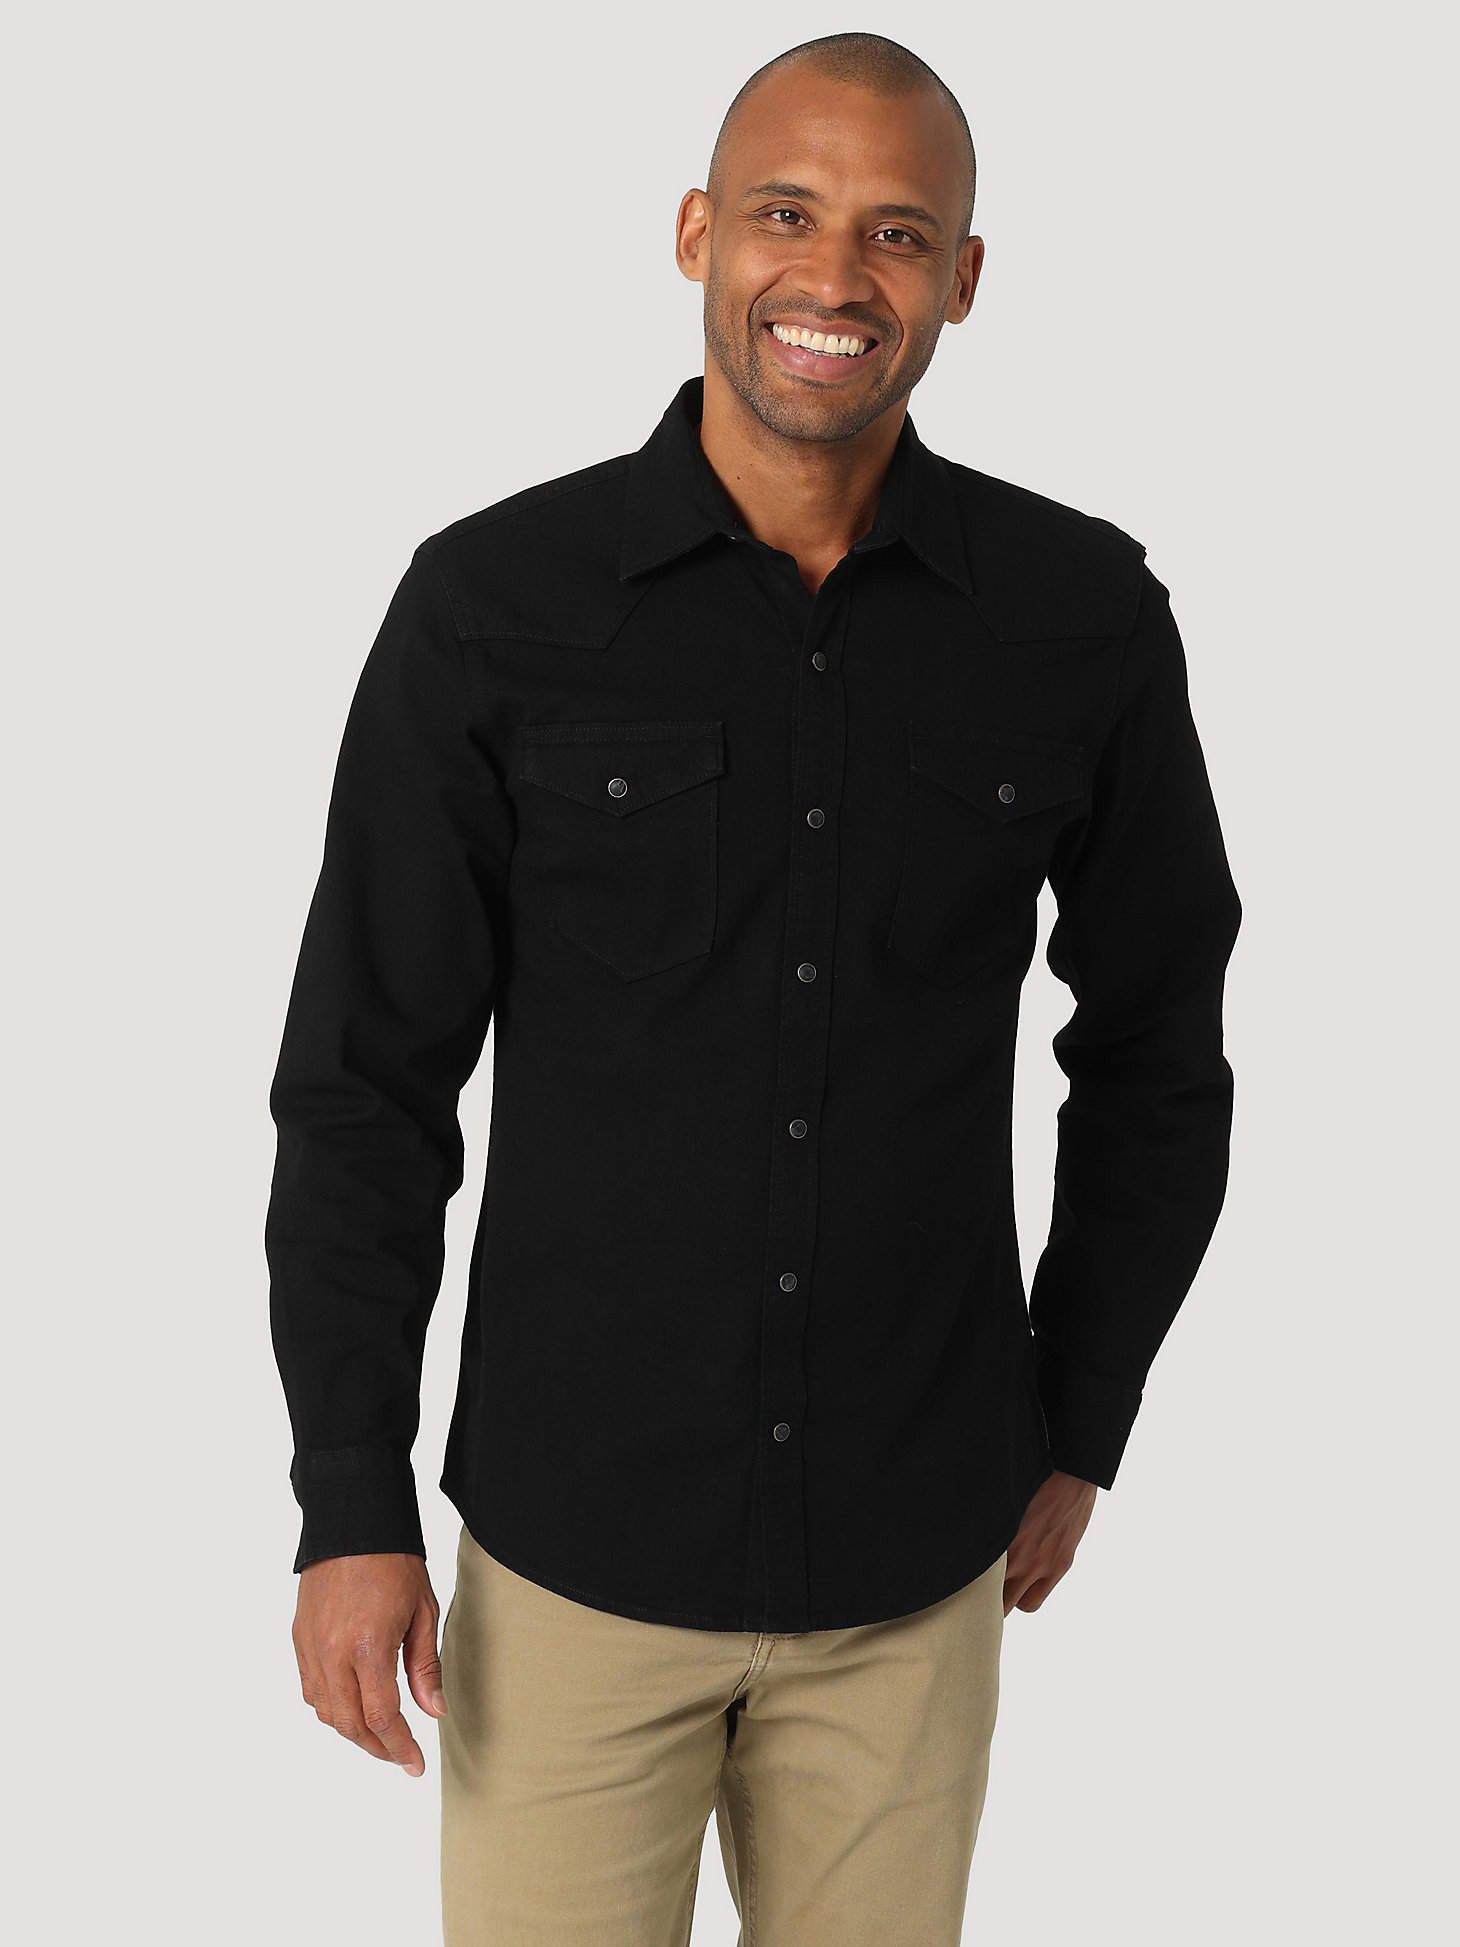 Men's Comfort Flex Denim Shirt in Black main view